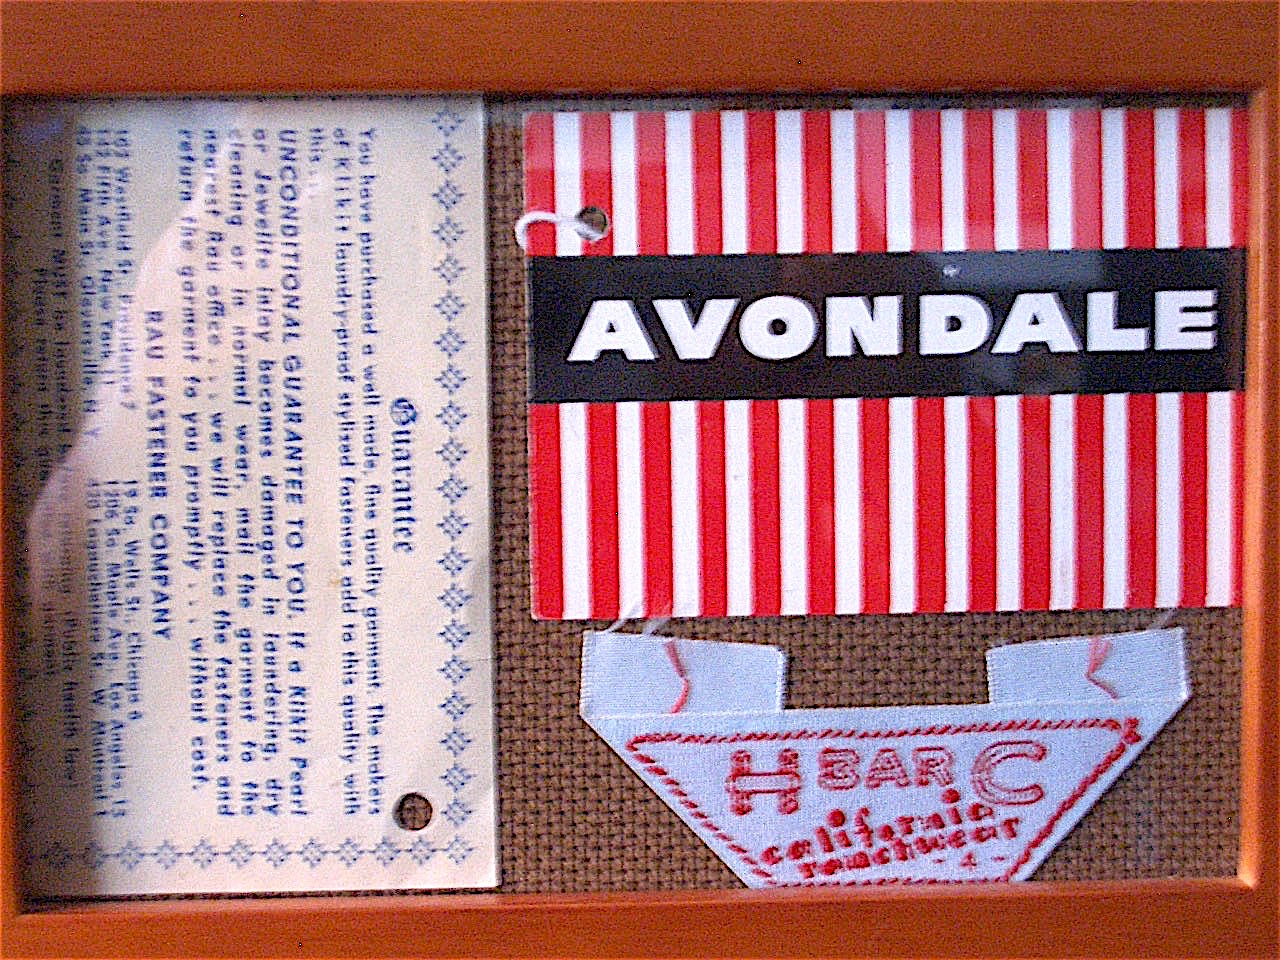 H-Bar-C - Rau Fastener Company - Avondale - HbarC label